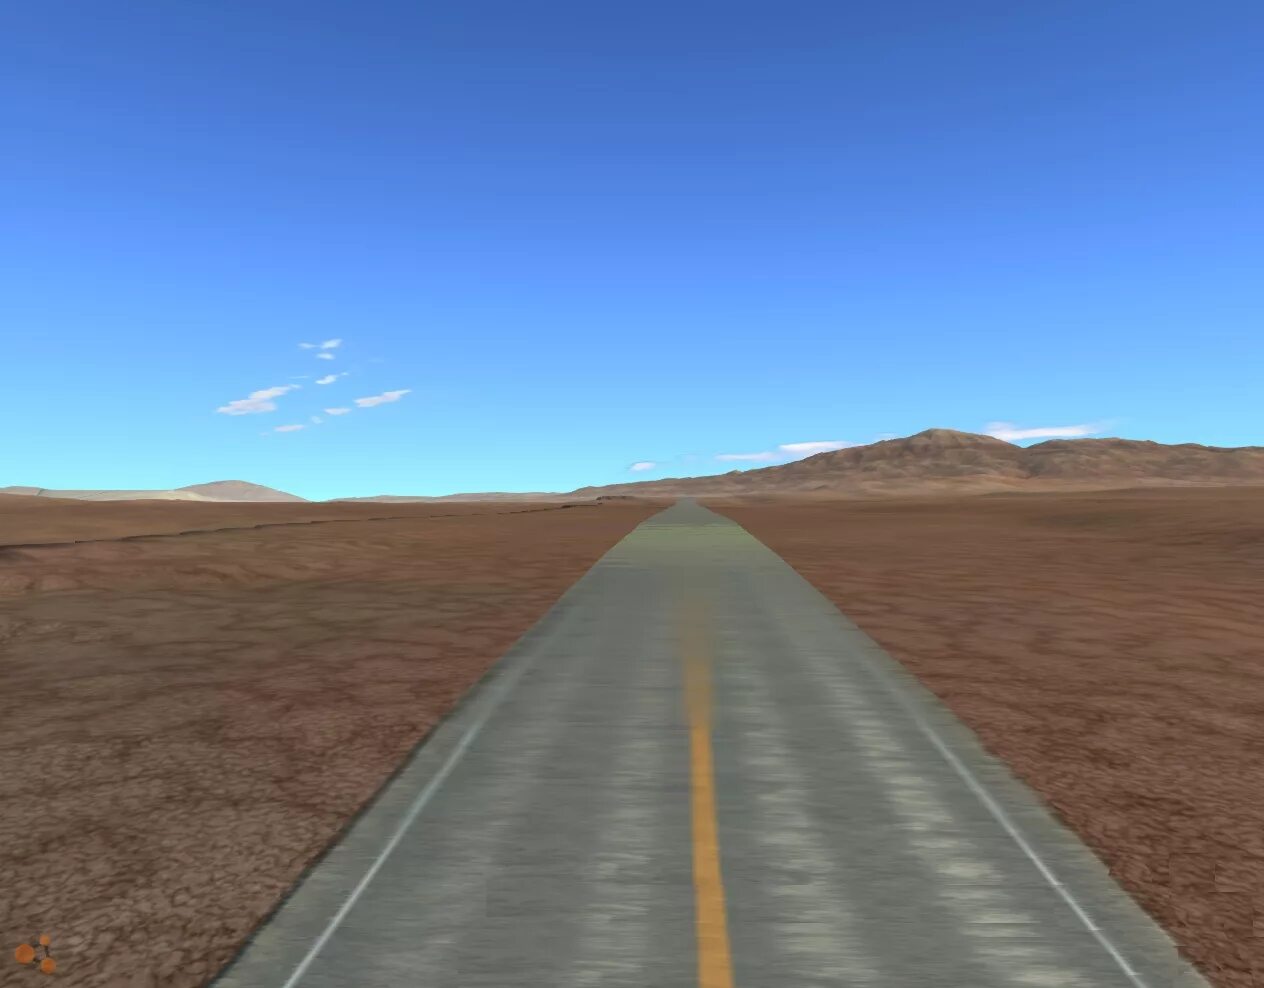 Desert Highway BEAMNG Drive. Дорога в пустыне для BEAMNG Drive. Пустынная трасса BEAMNG. Карта Desert Highway для BEAMNG Drive.